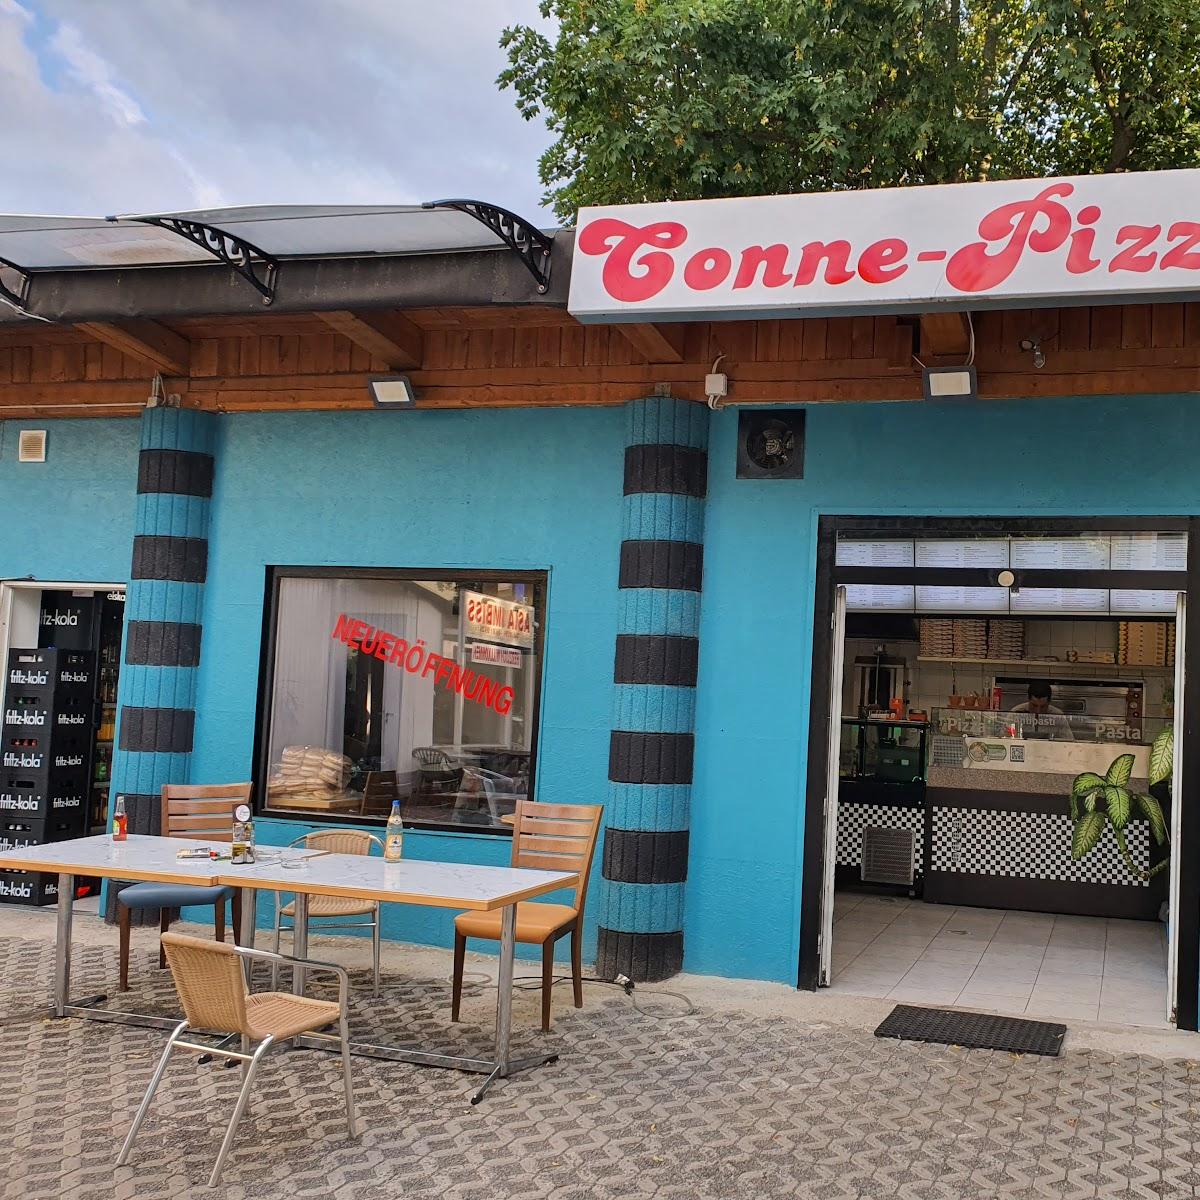 Restaurant "Conne-Pizza Leipzig" in Leipzig